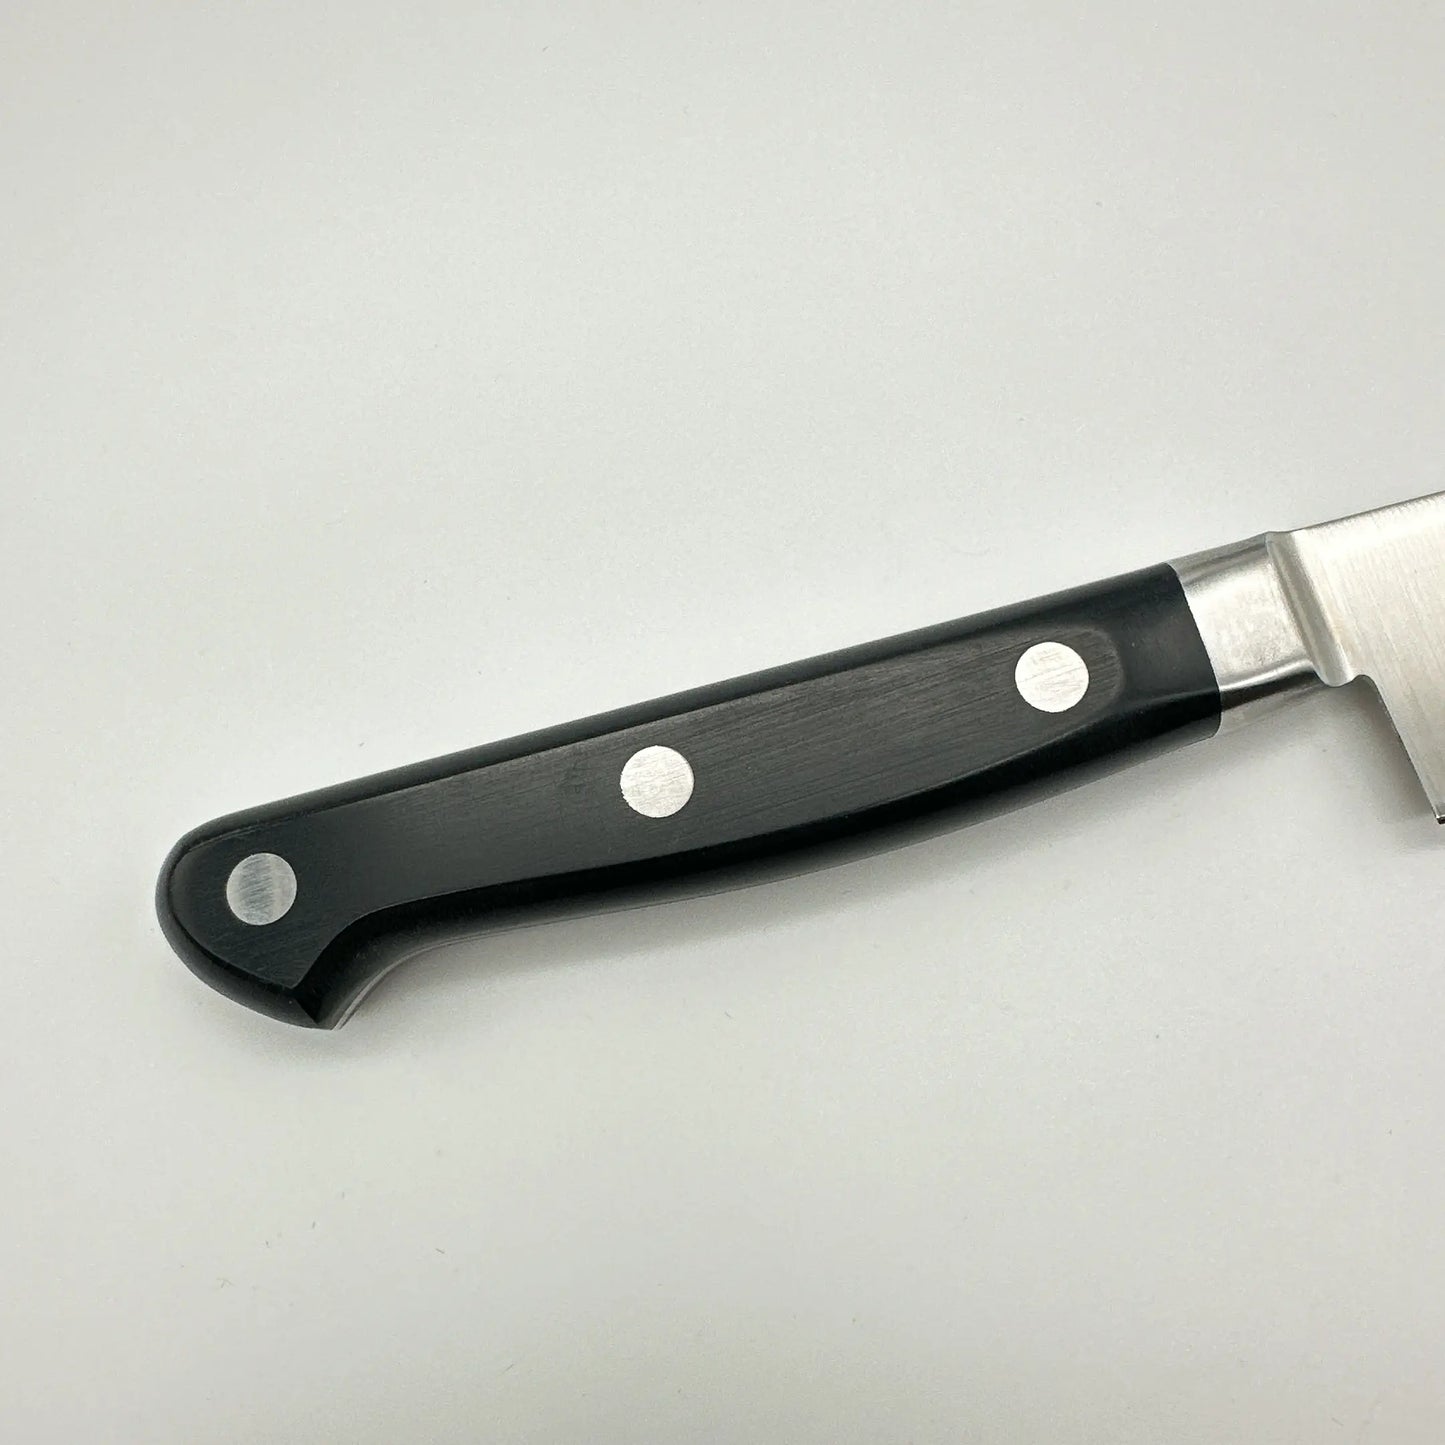 Takayuki Sakai Grand Chef SW Steel Slicer (Sujihiki) Western Knife